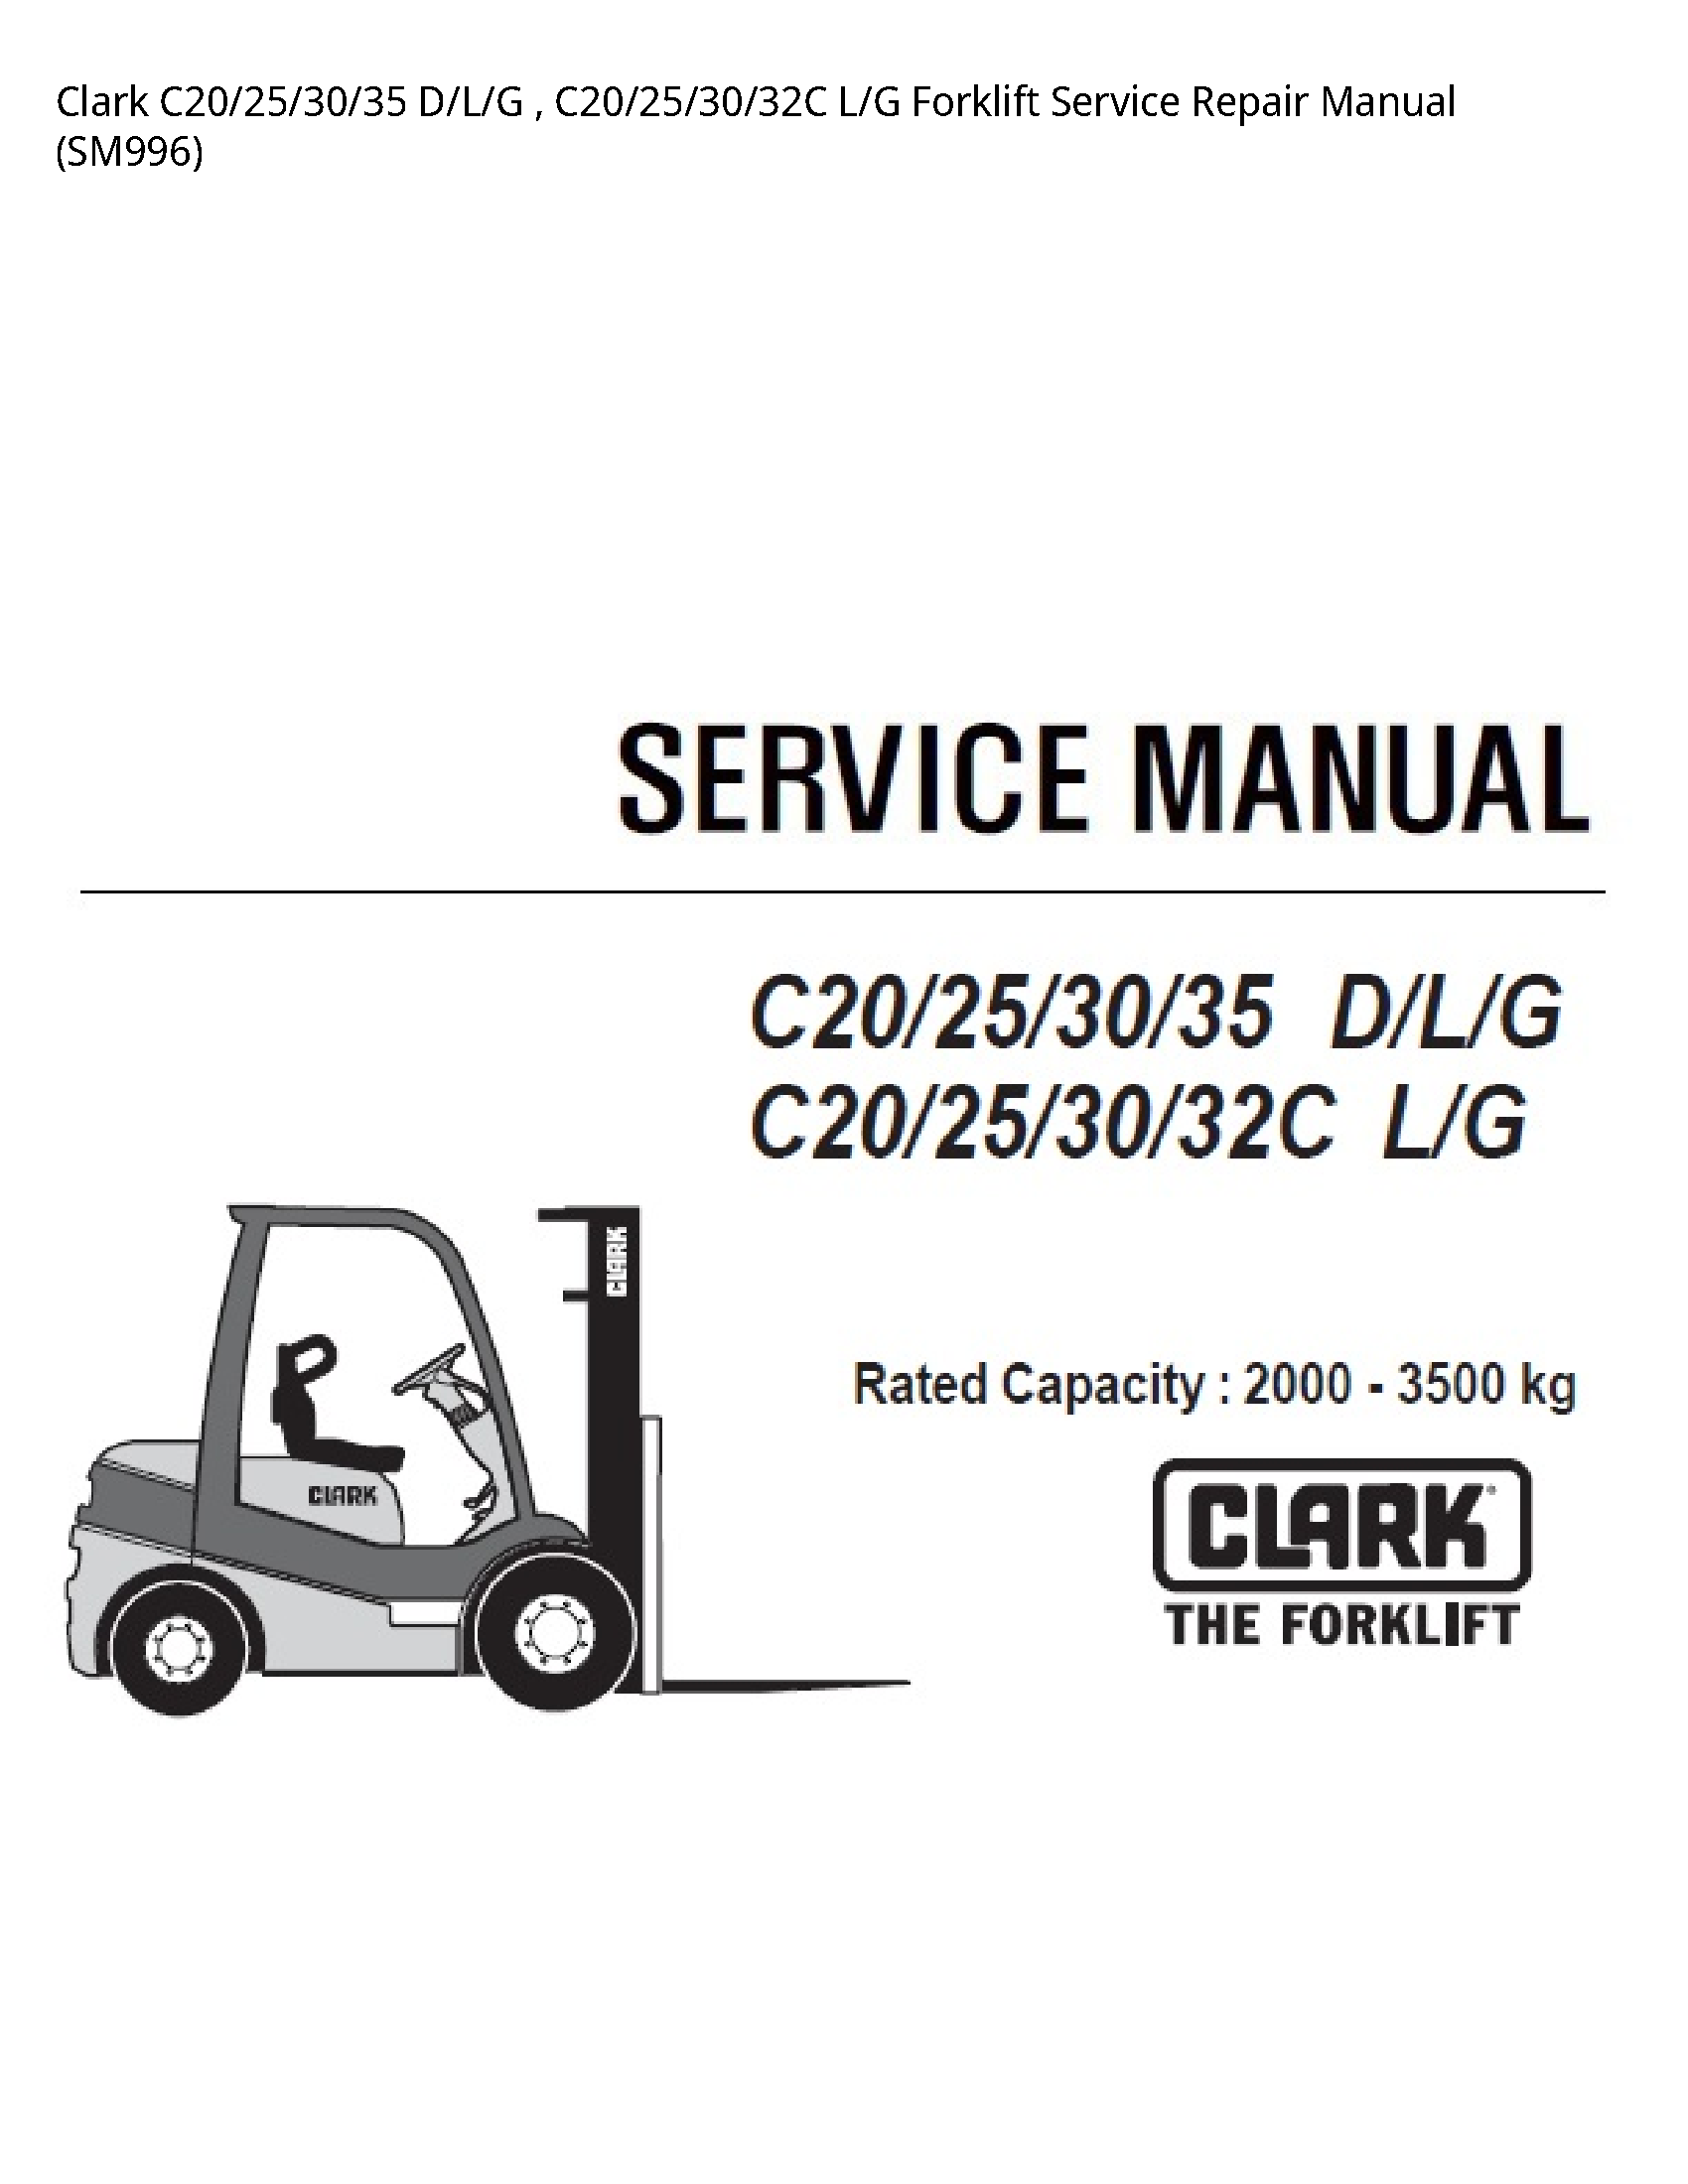 Clark C20 D/L/G L/G Forklift manual